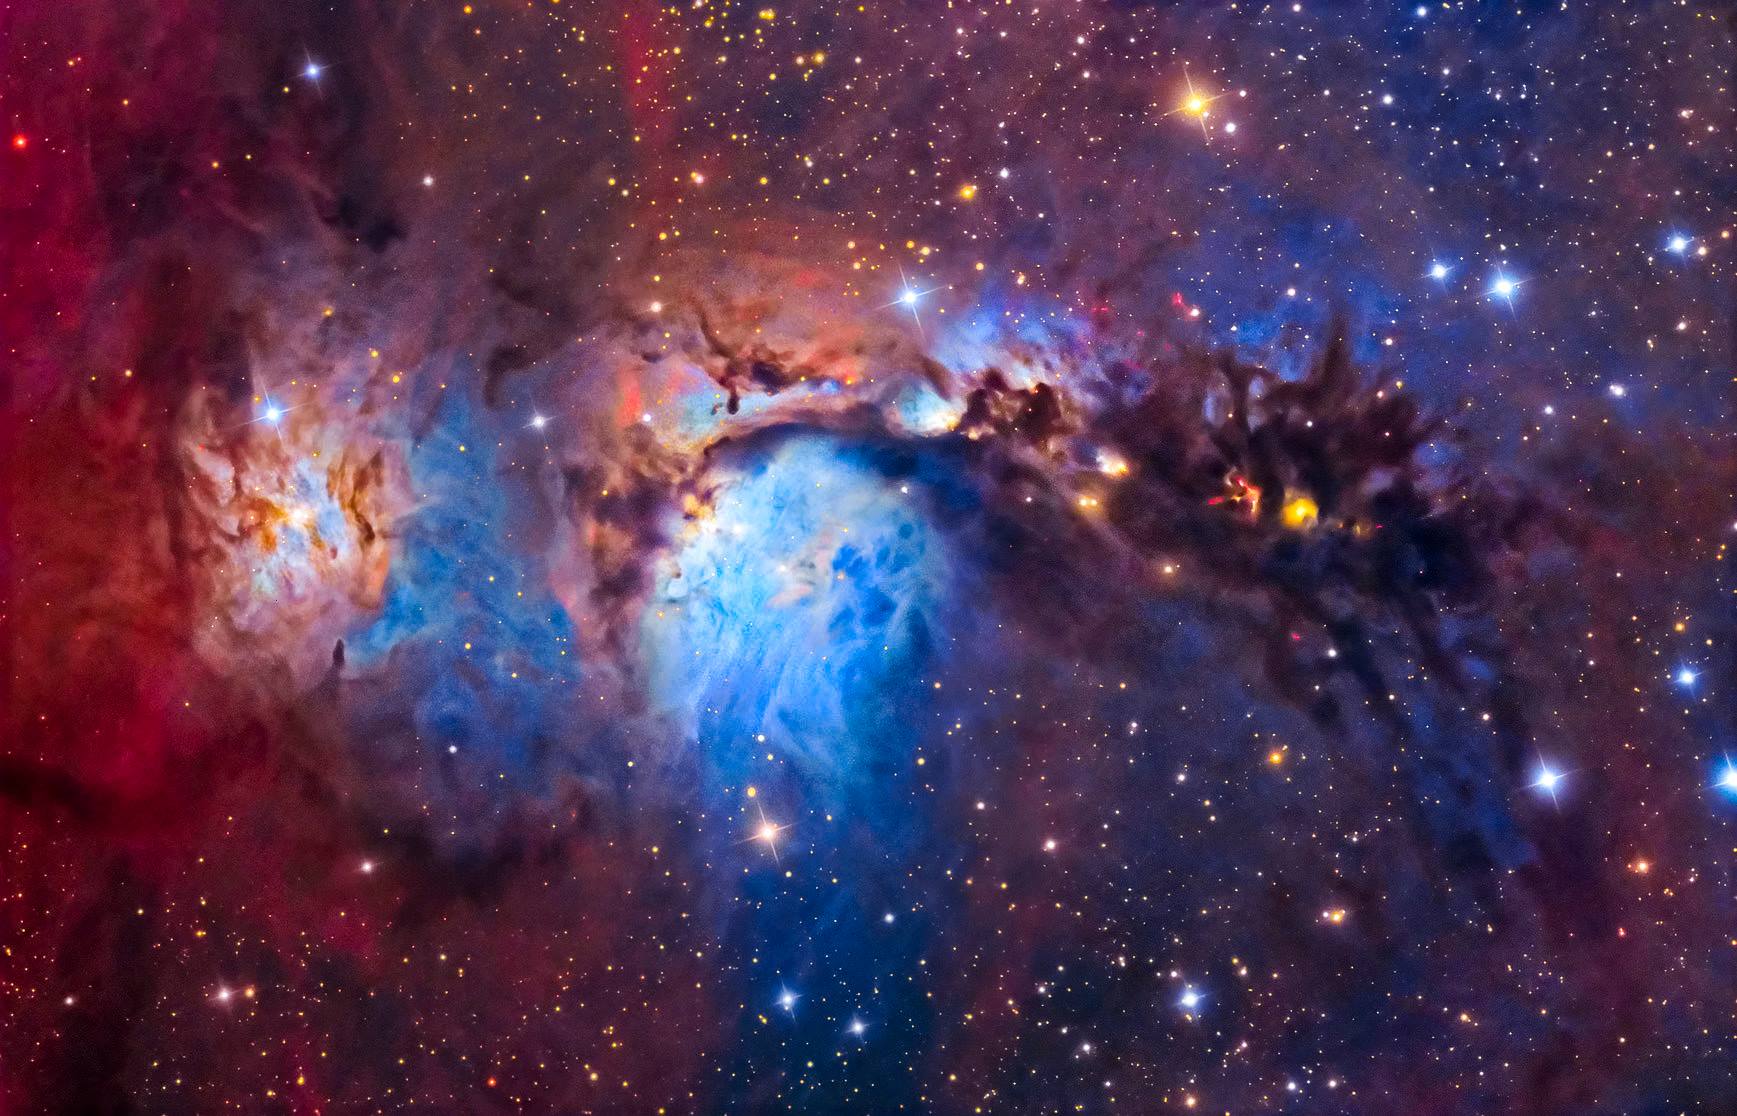 Emission Nebula Wallpapers - Top Free Emission Nebula Backgrounds ...